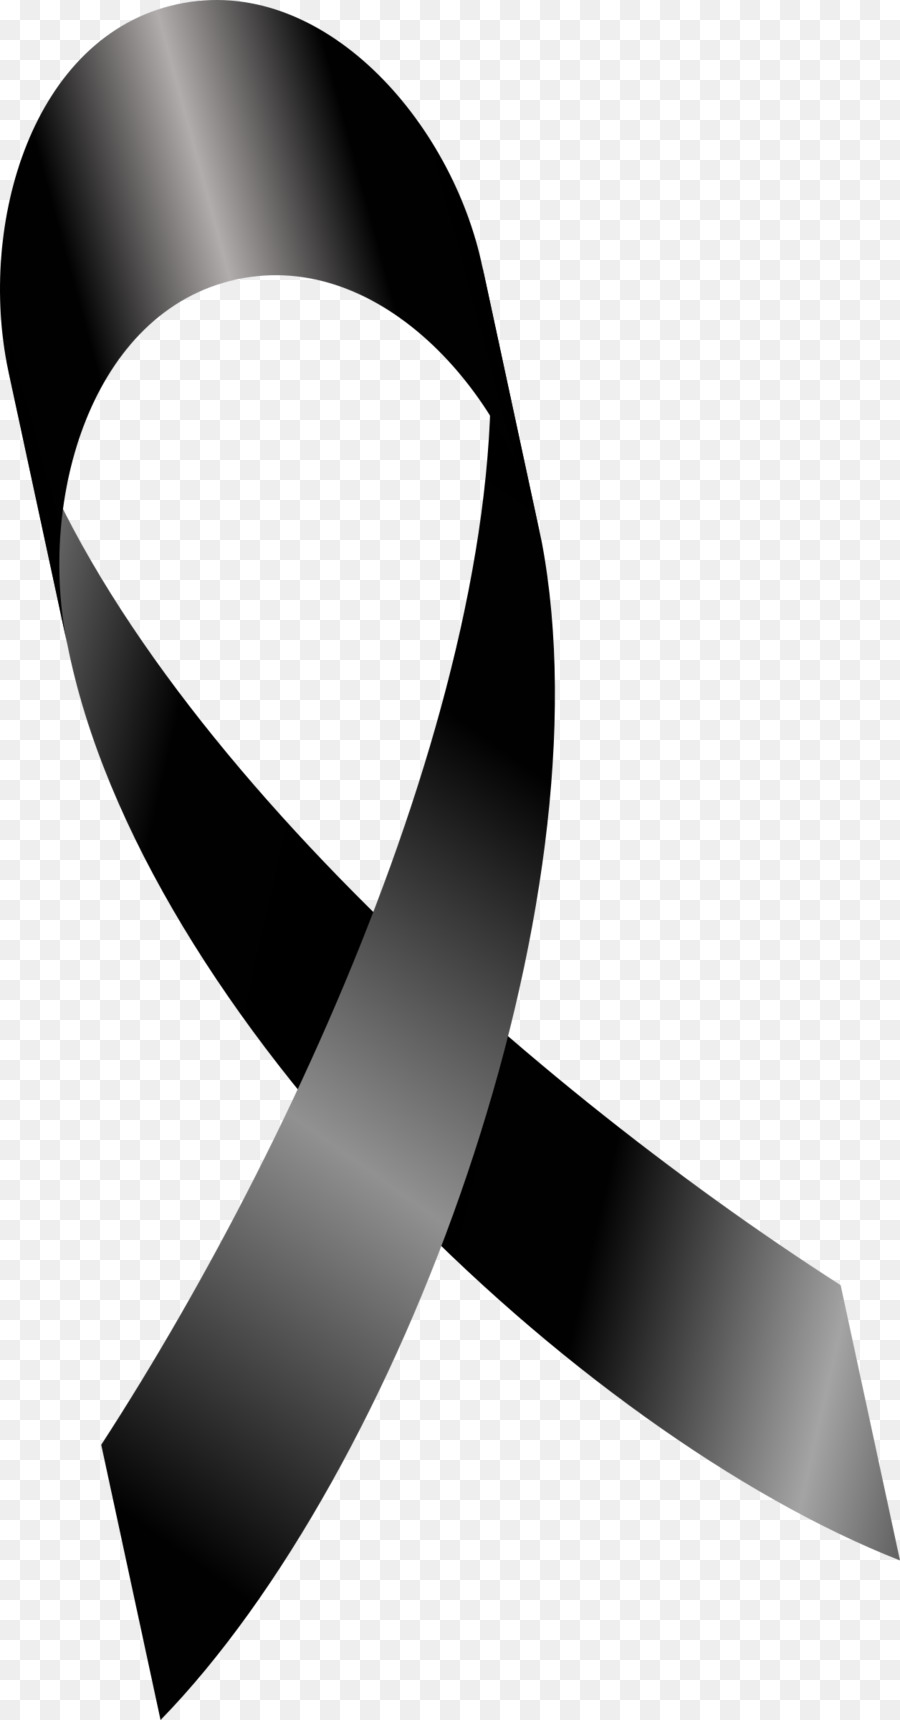 Ribbon Clip art - mourning png download - 1256*2400 - Free Transparent Ribbon png Download.